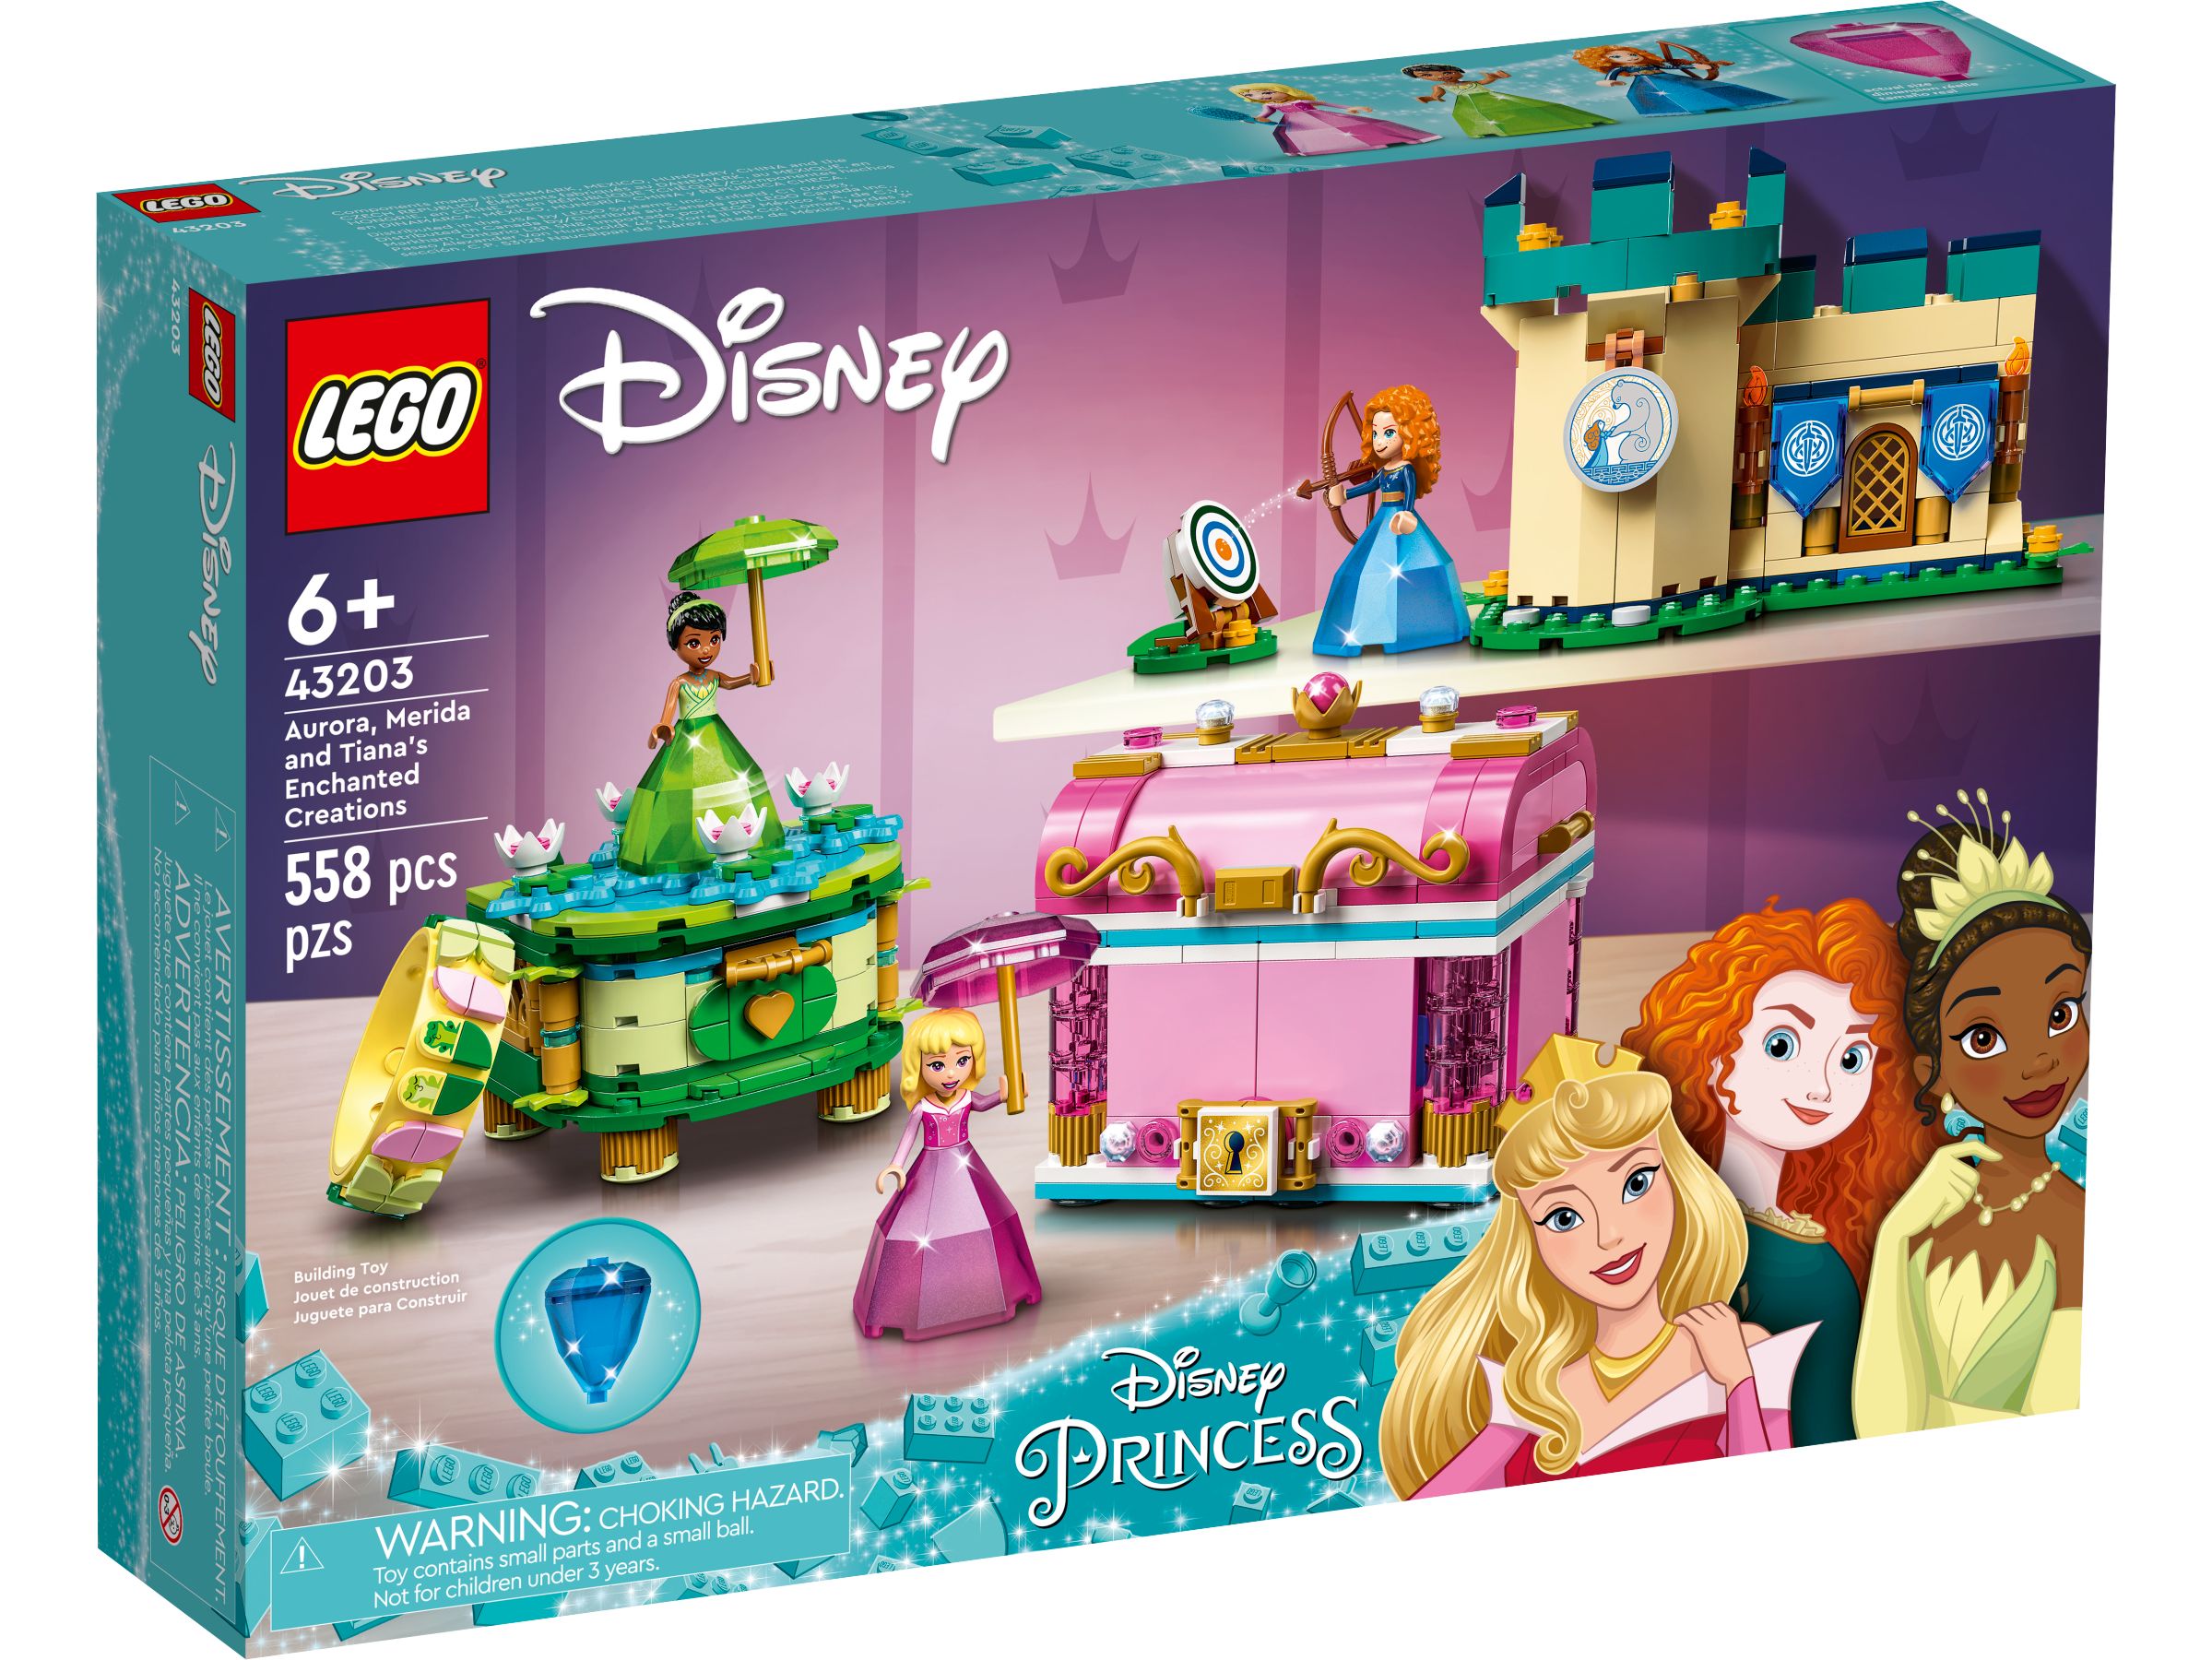 LEGO Disney 43203 Auroras, Meridas und Tianas Zauberwerke LEGO_43203_alt1.jpg